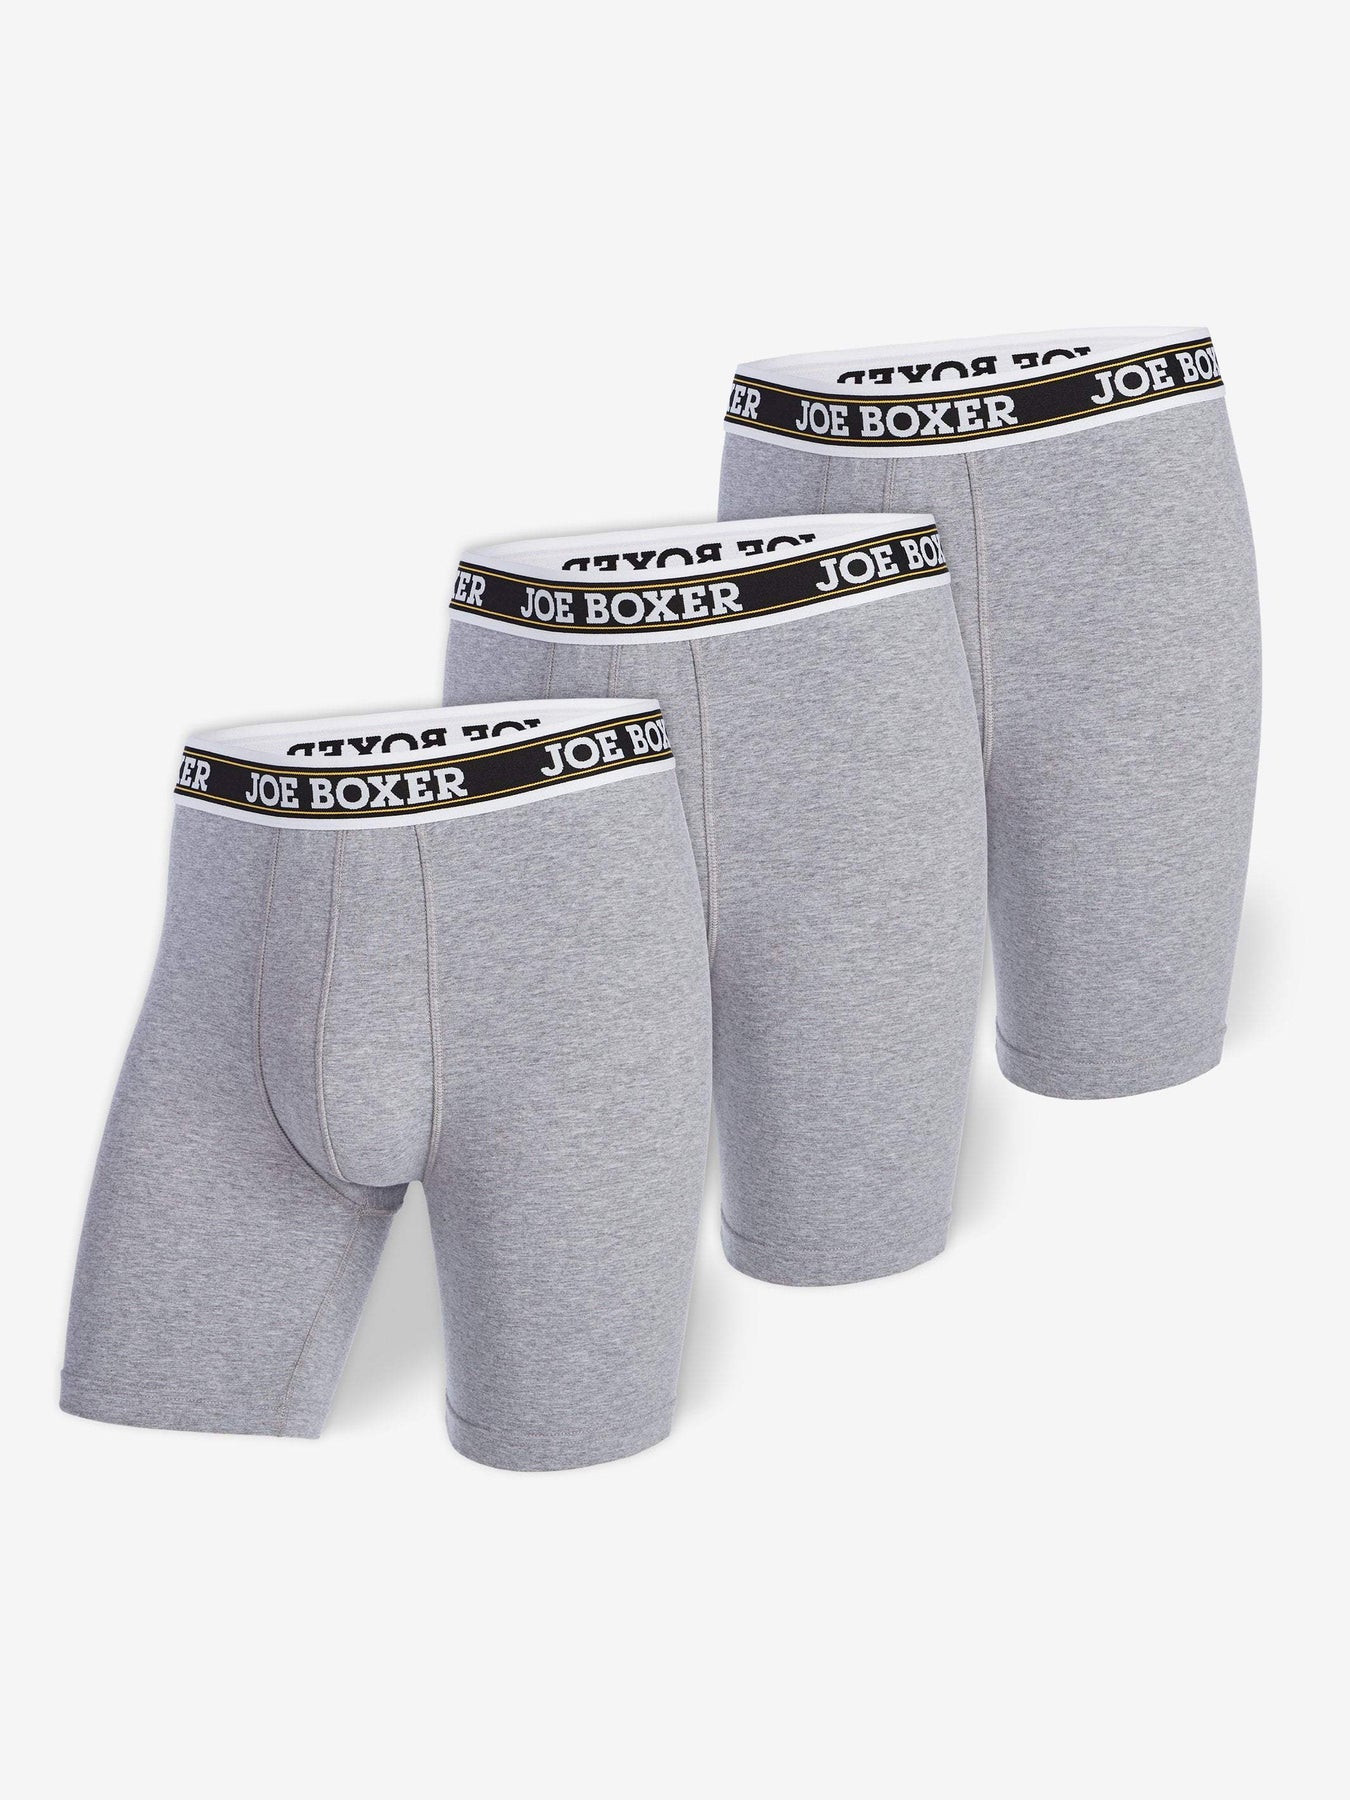 Joe Boxer mens 3 Pack Stretch Cycle Short 90/10 Underwear, U019 Black,  X-Large US 